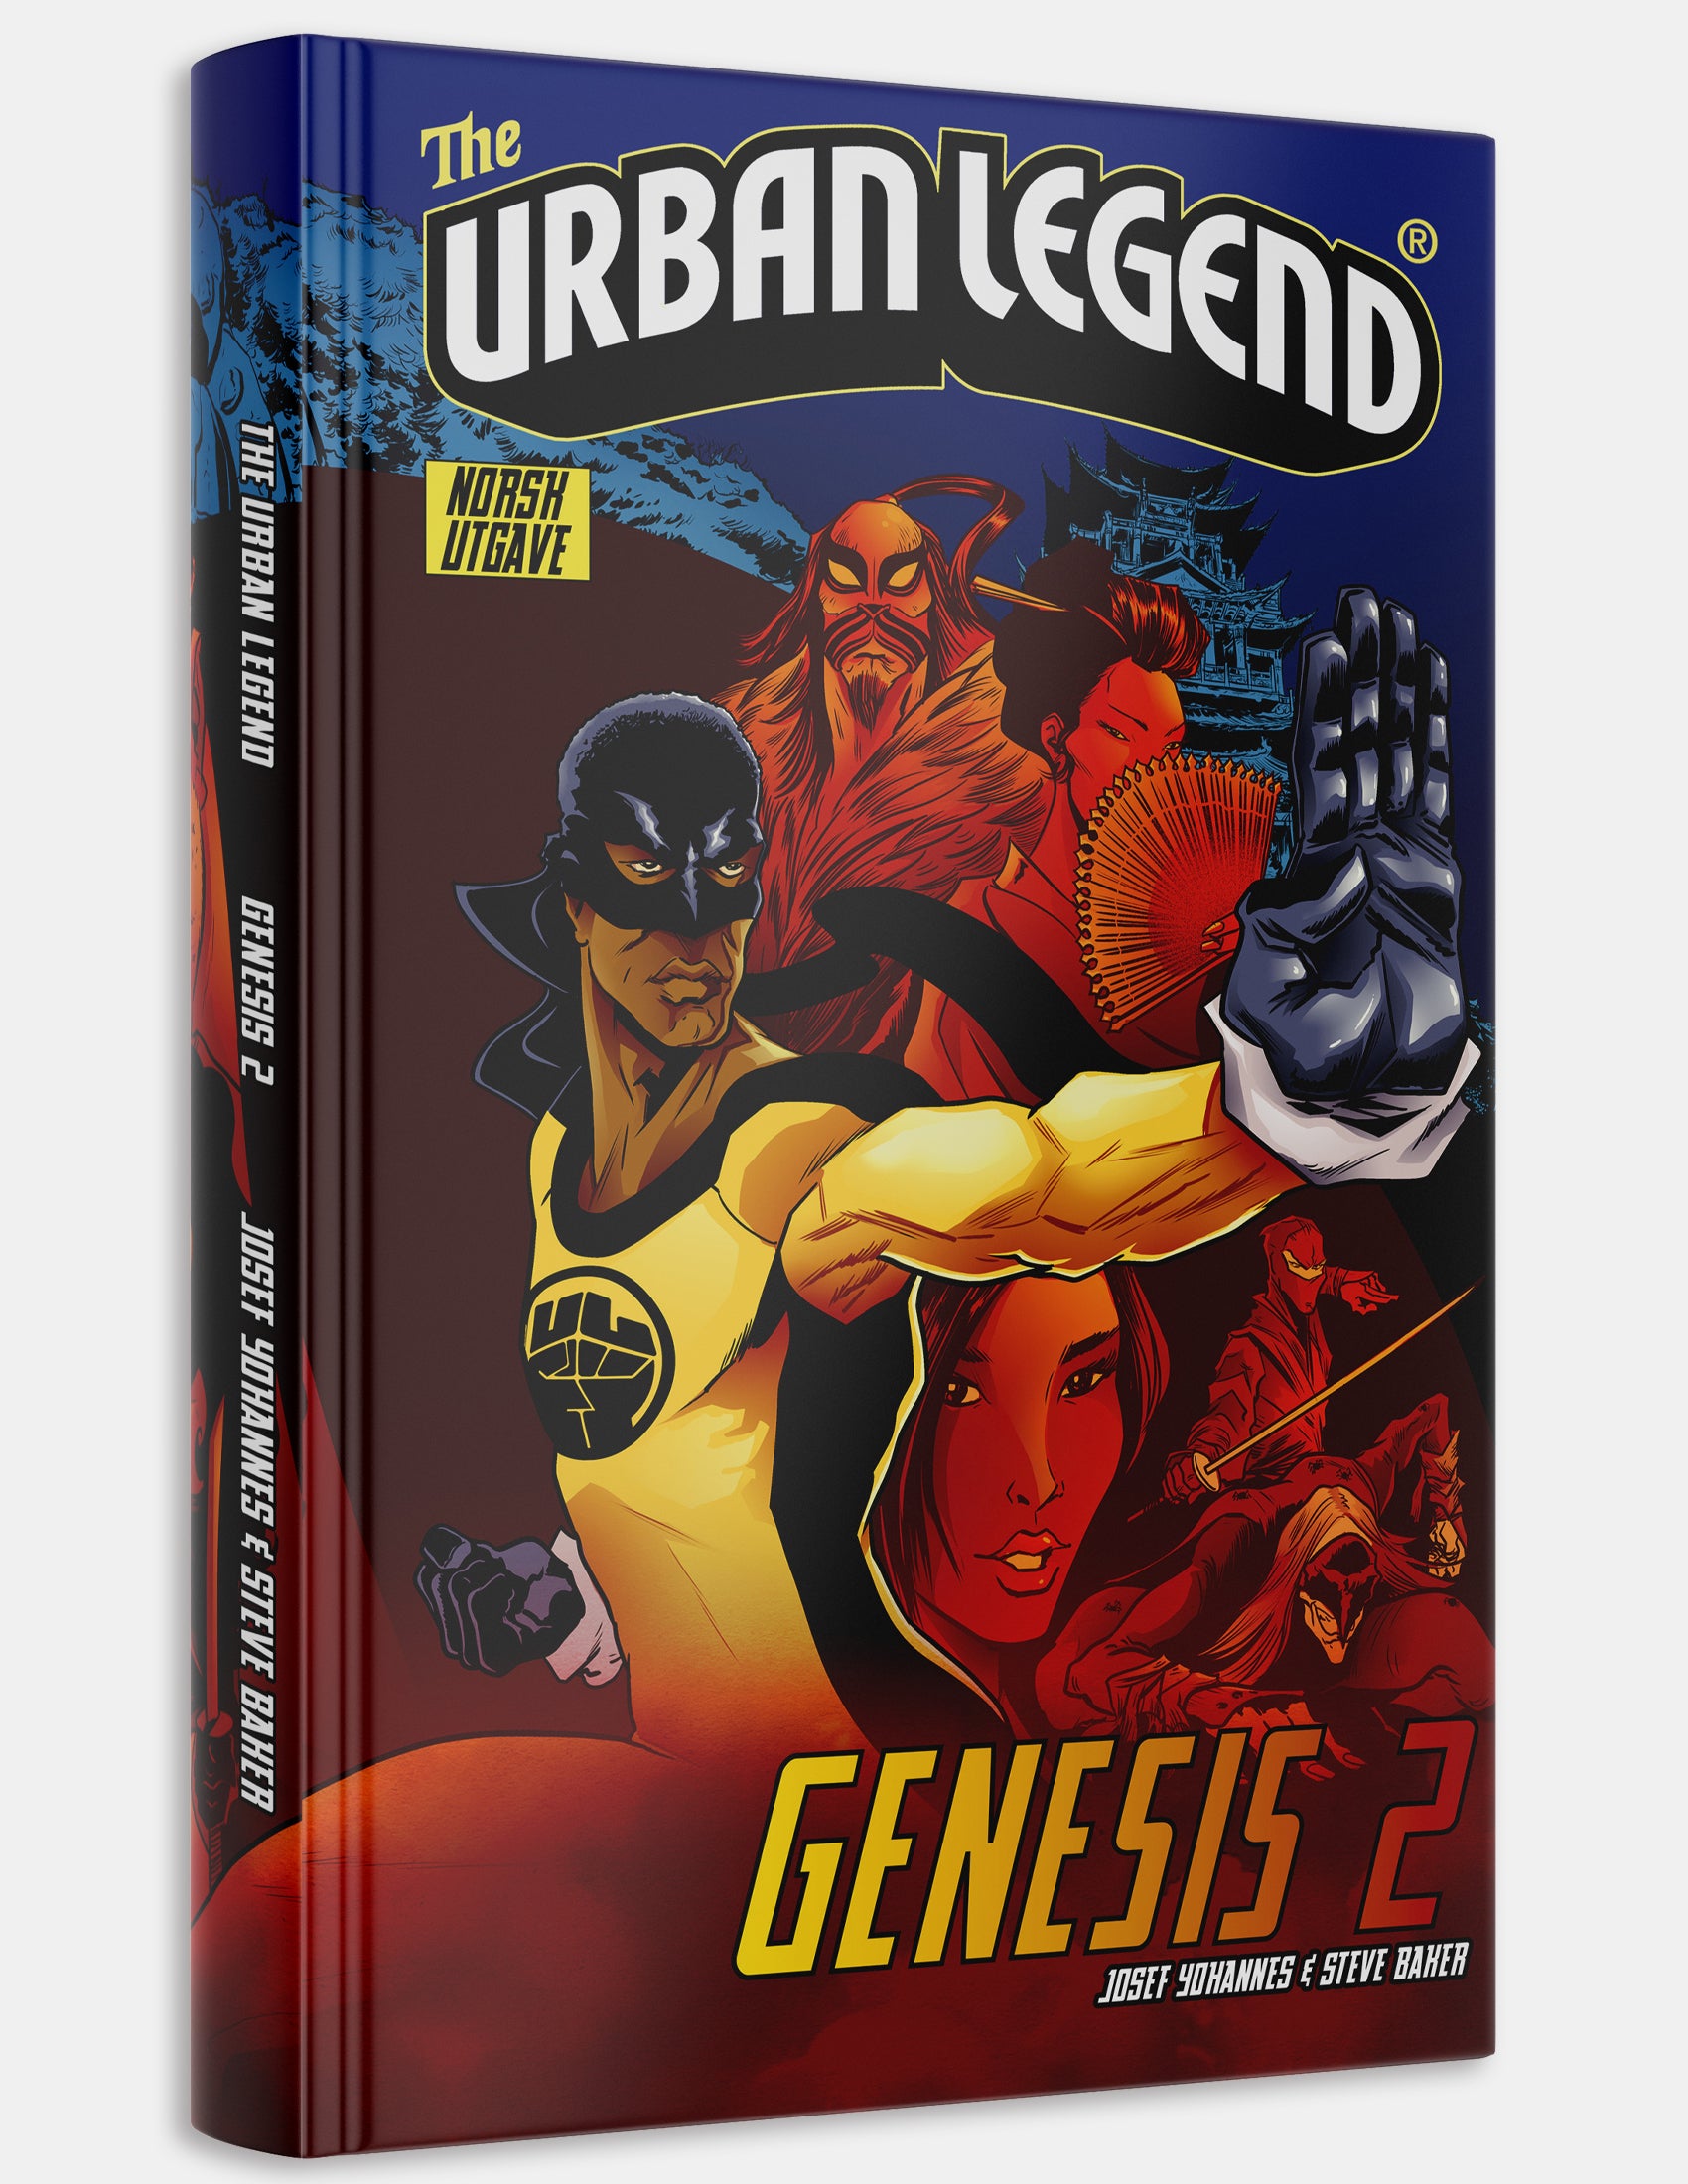 The Urban Legend - Genesis part 2 (Sesong 1 - Paperback)